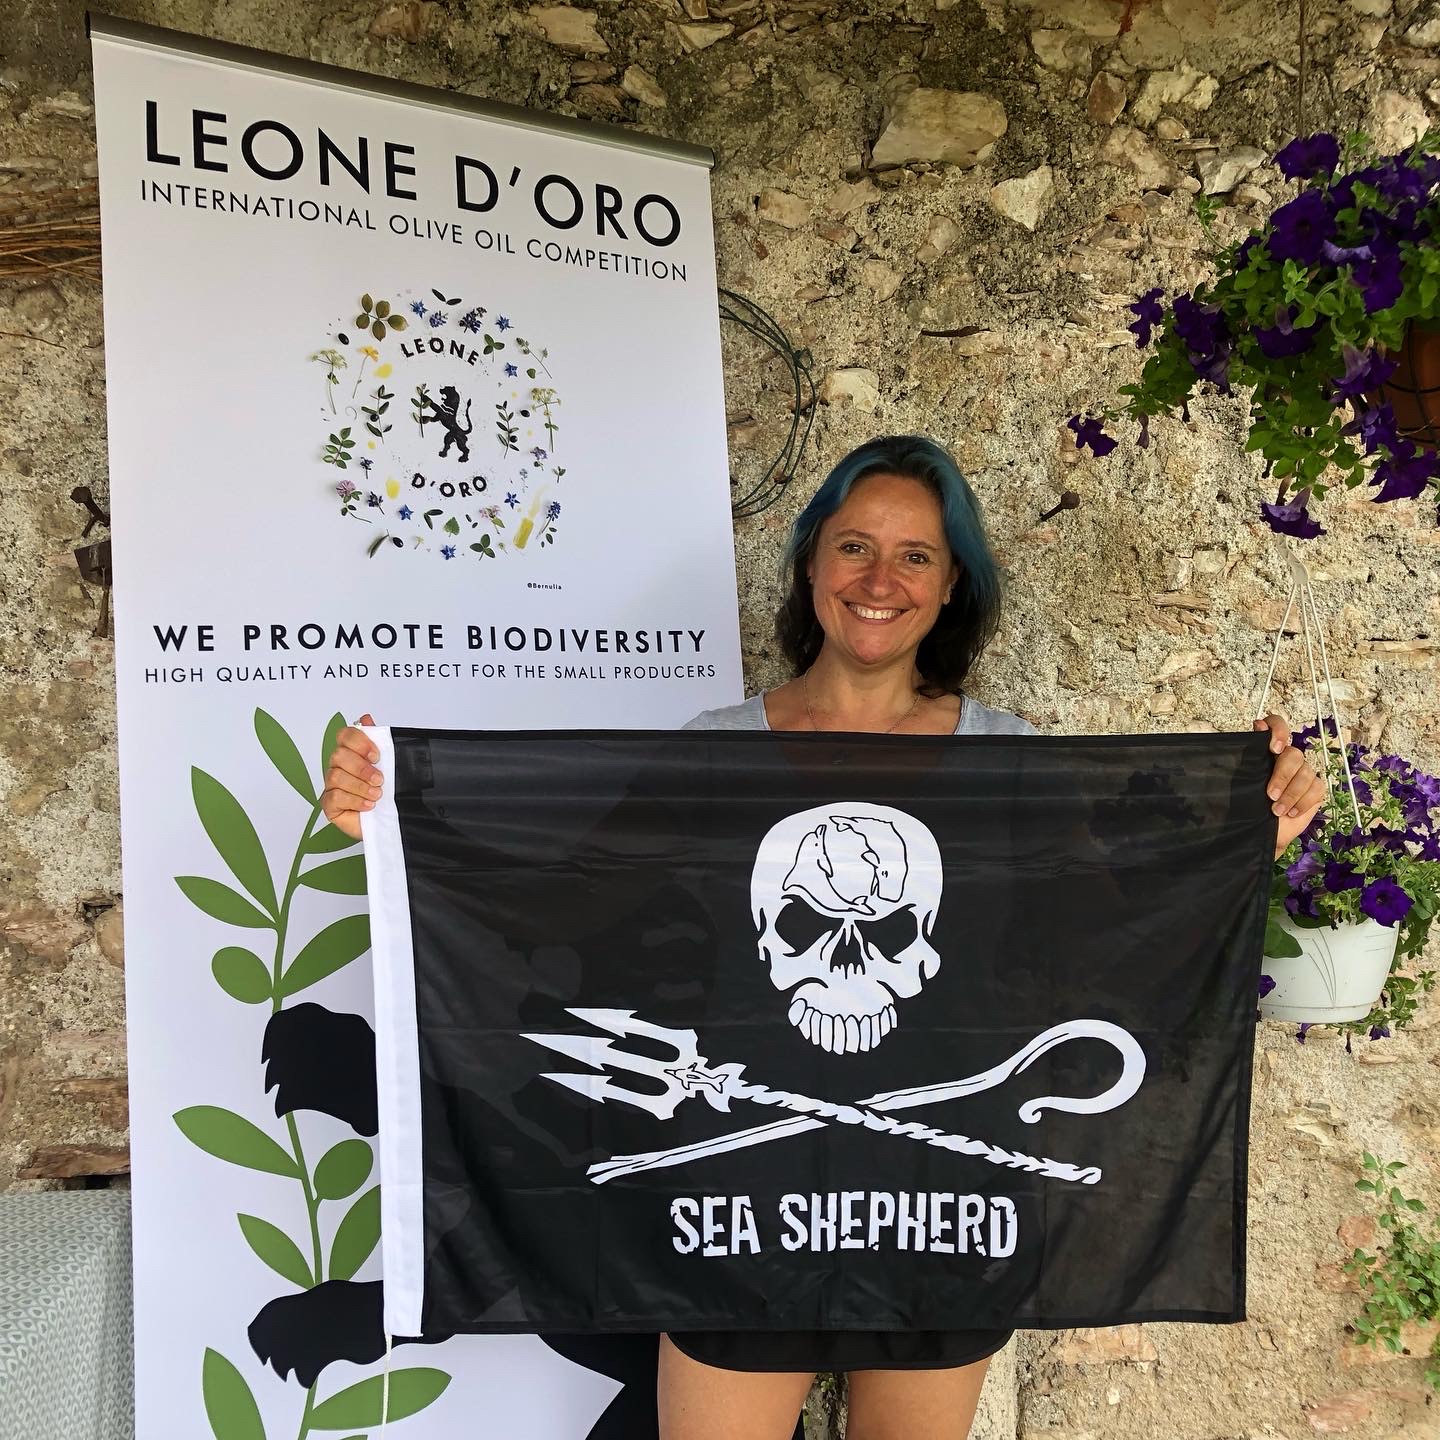 Maria Paola Gabusi, director of Leone d'Oro International, shows the sea shepherd flag